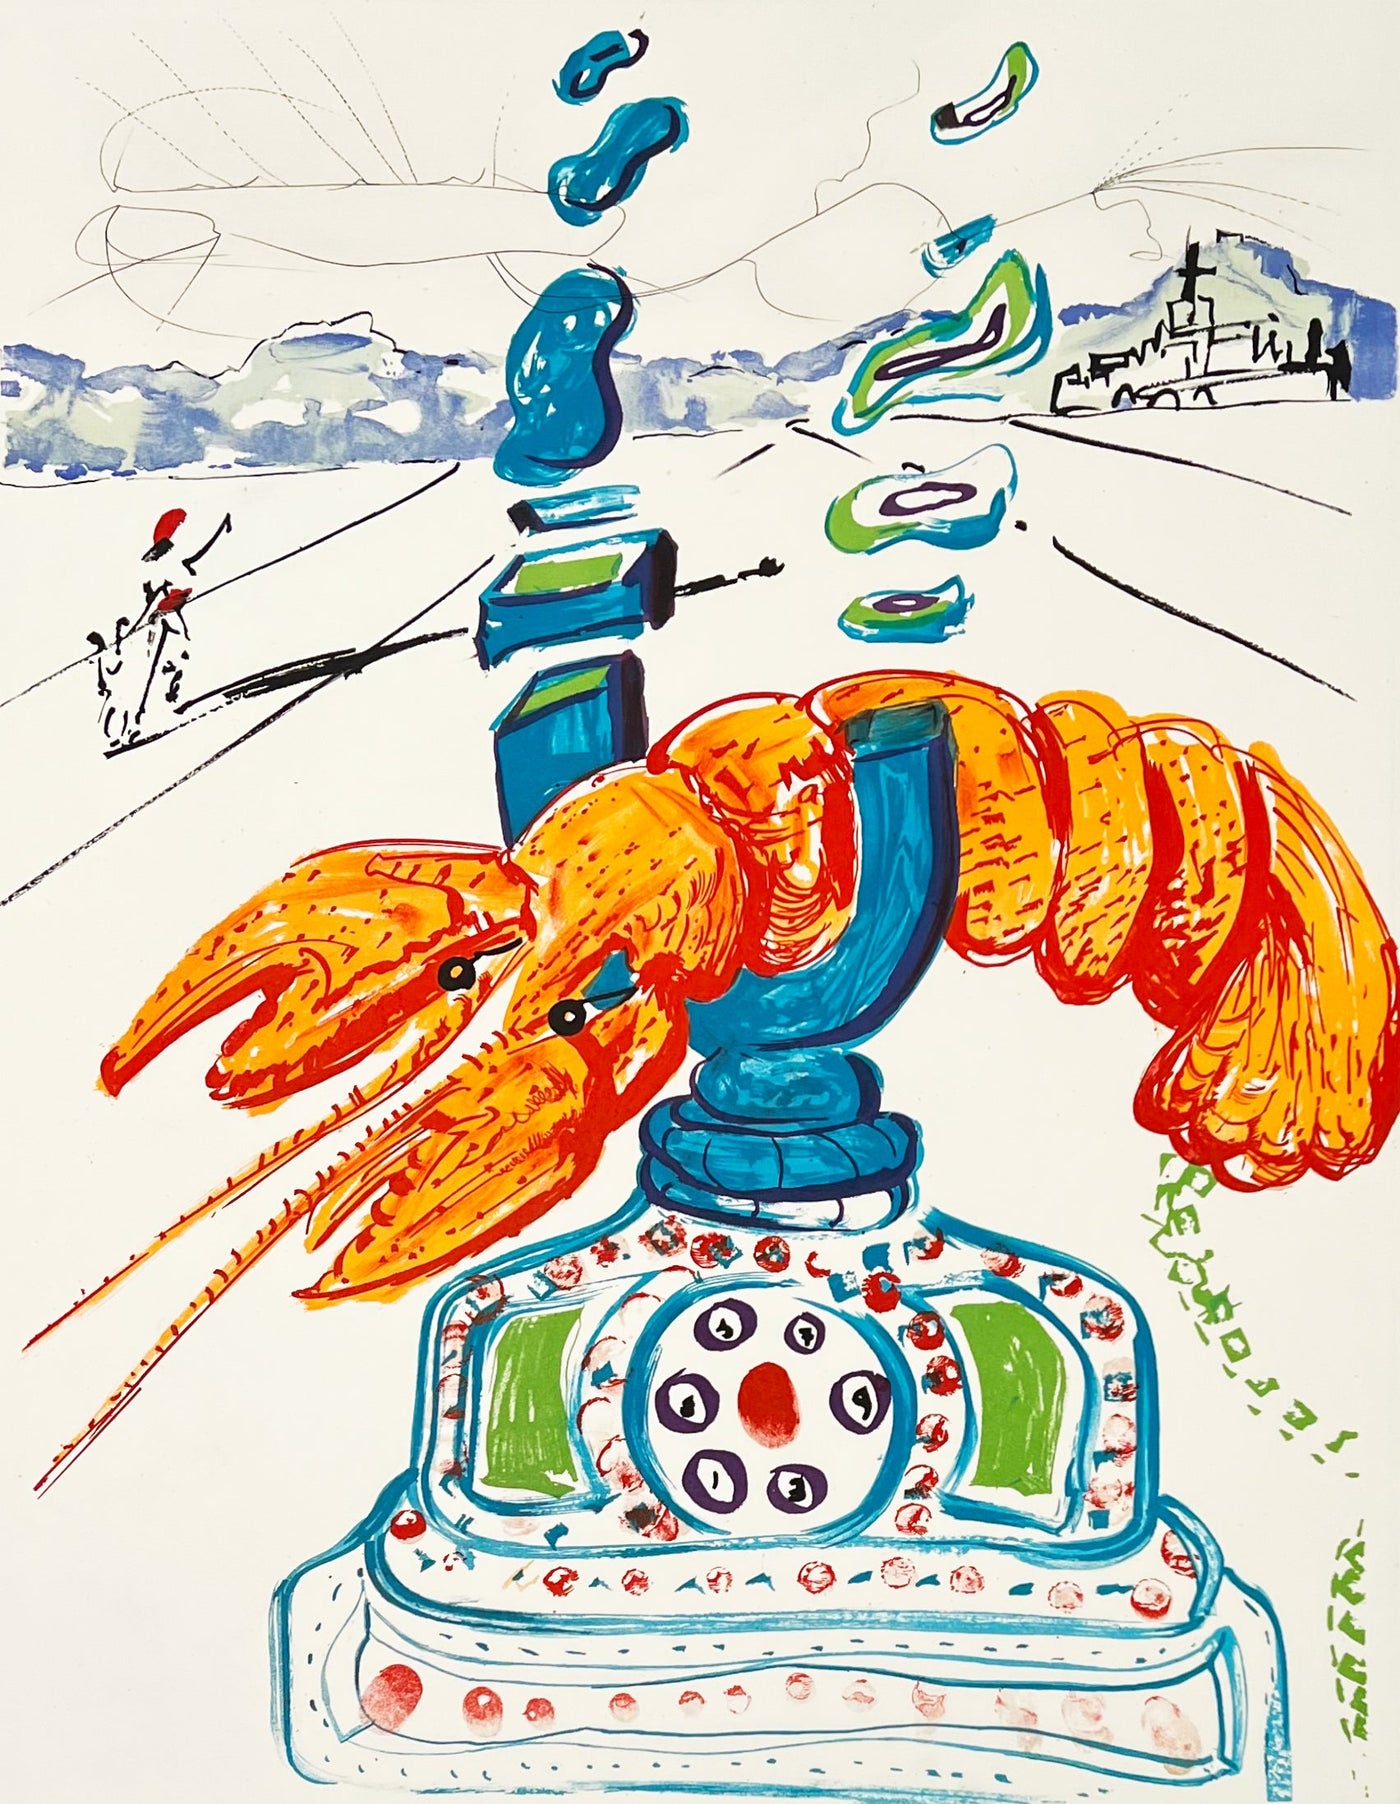 Salvador Dali Cybernetic Lobster Telephone (Field 75-11I) 1975